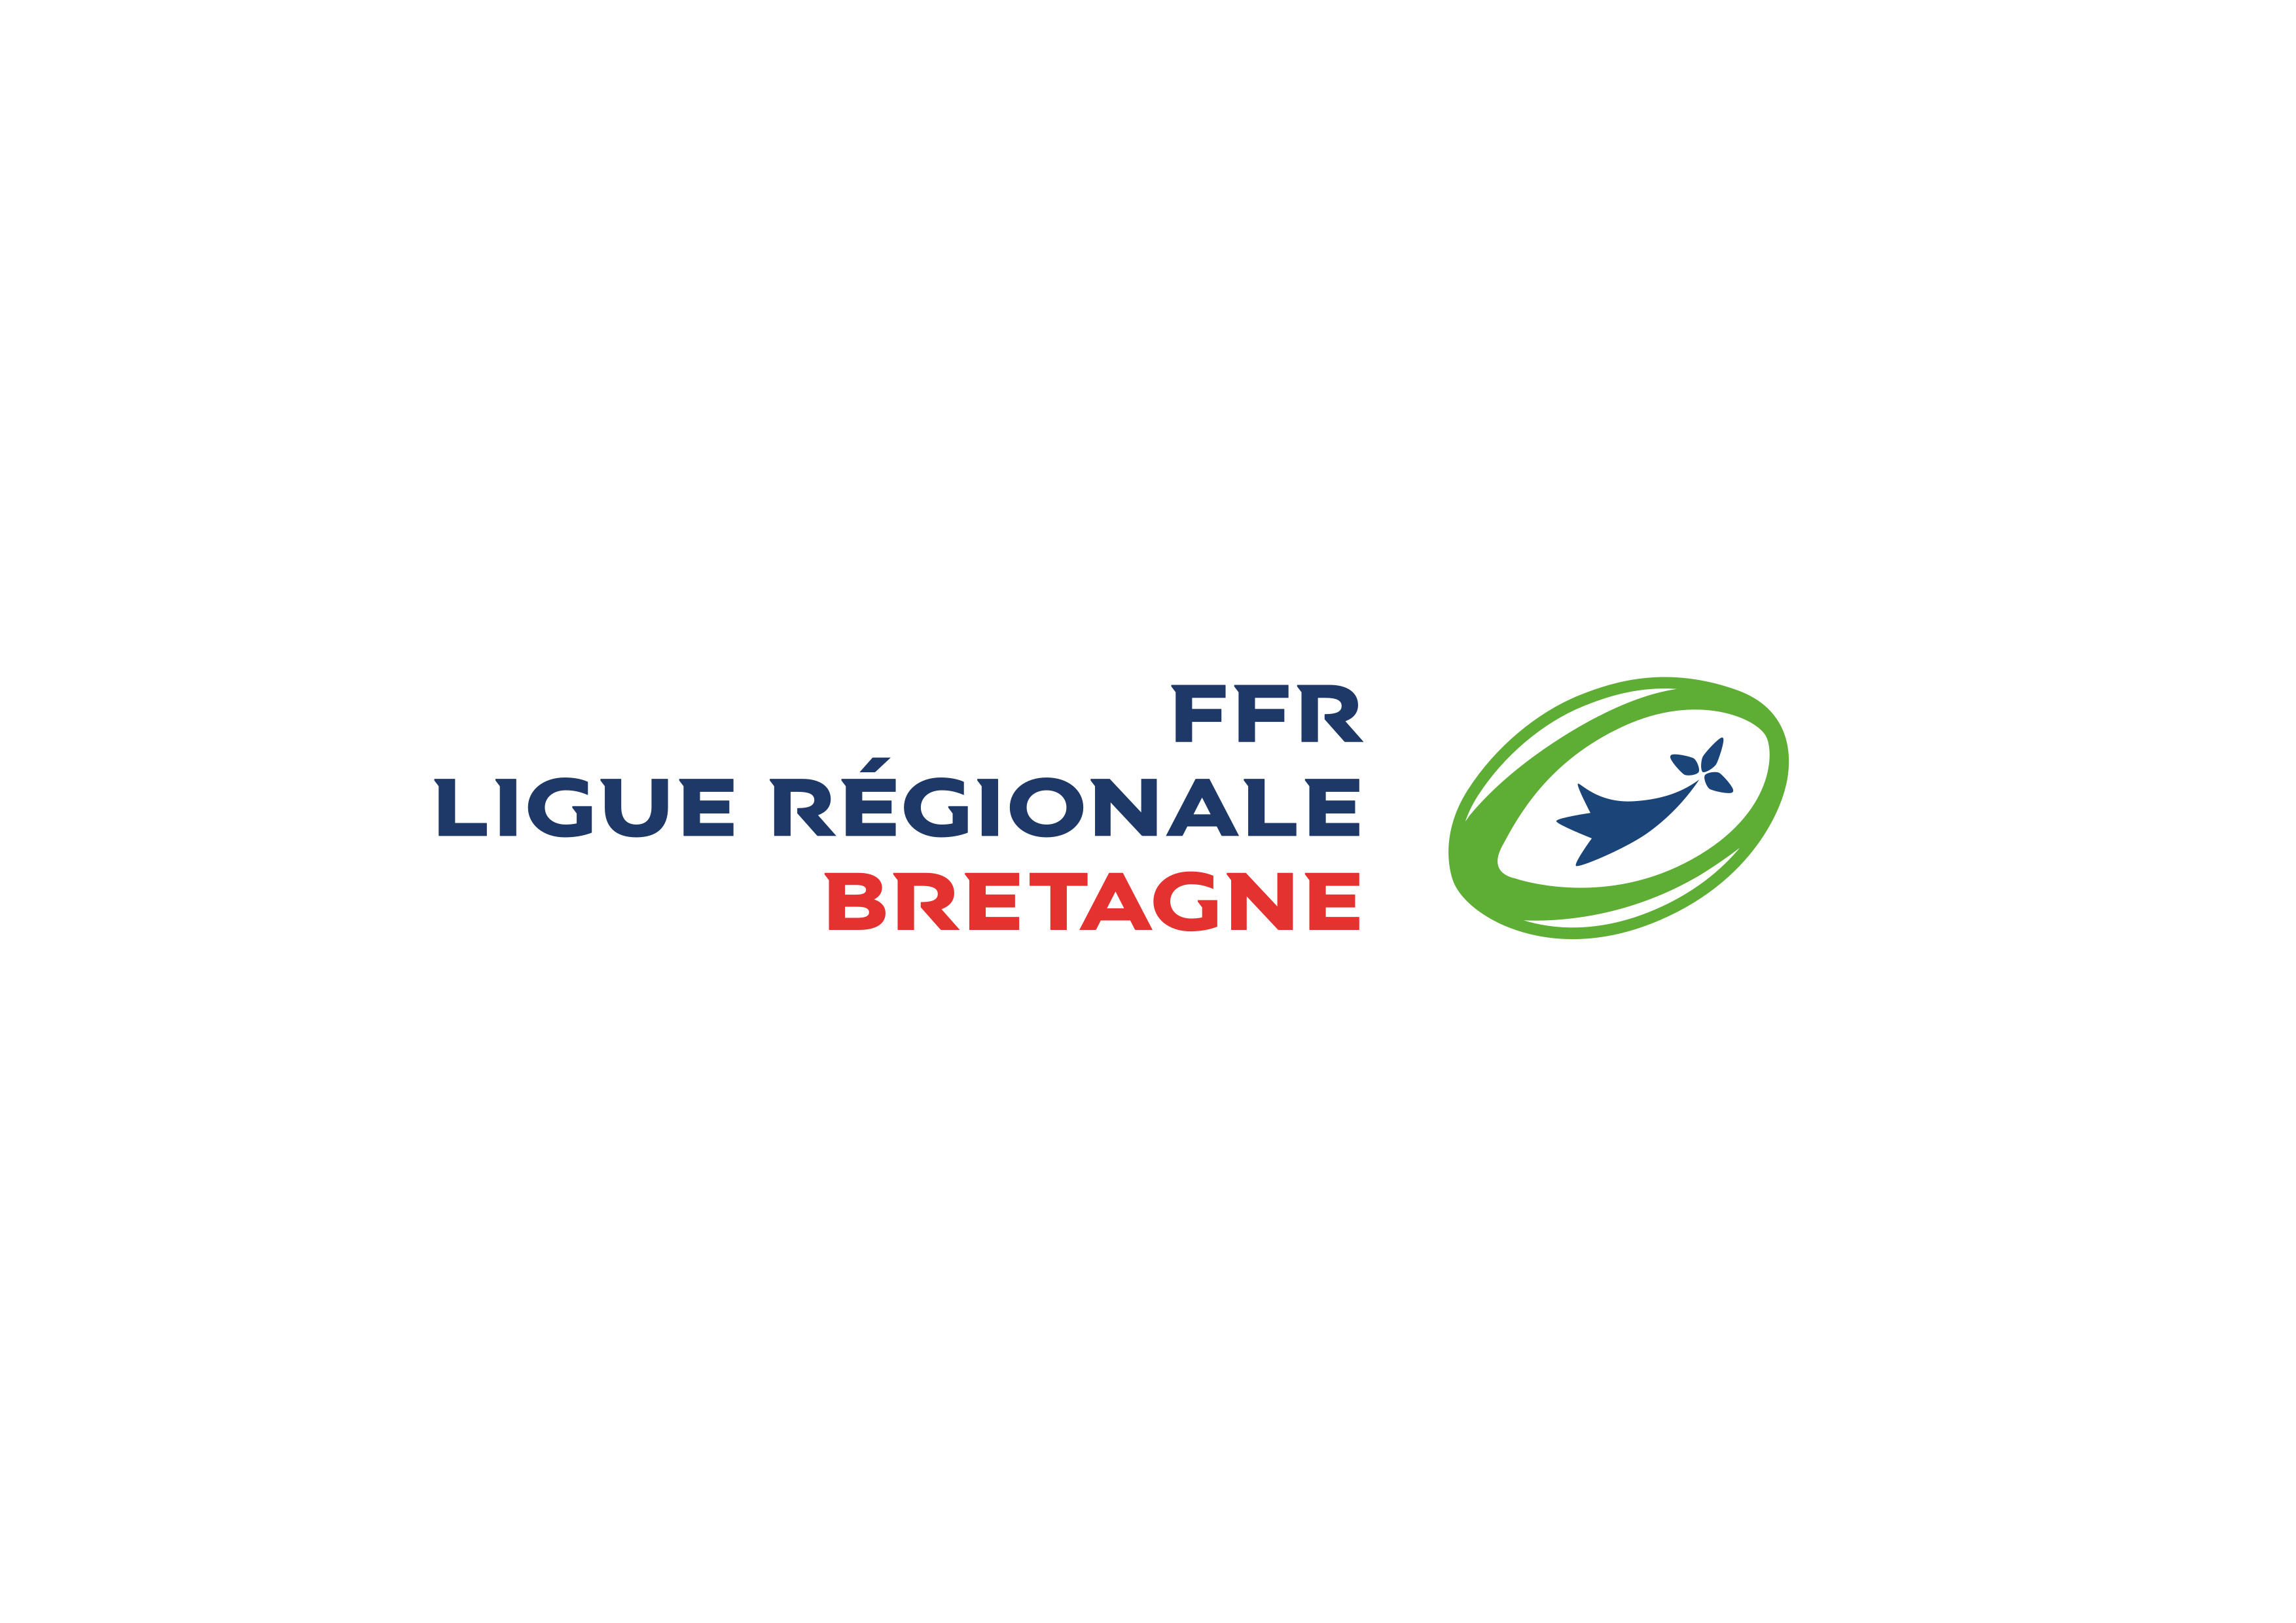 ligue-regionale-bretagne-de-rugby-logo-62135a808f57a819991024.jpg